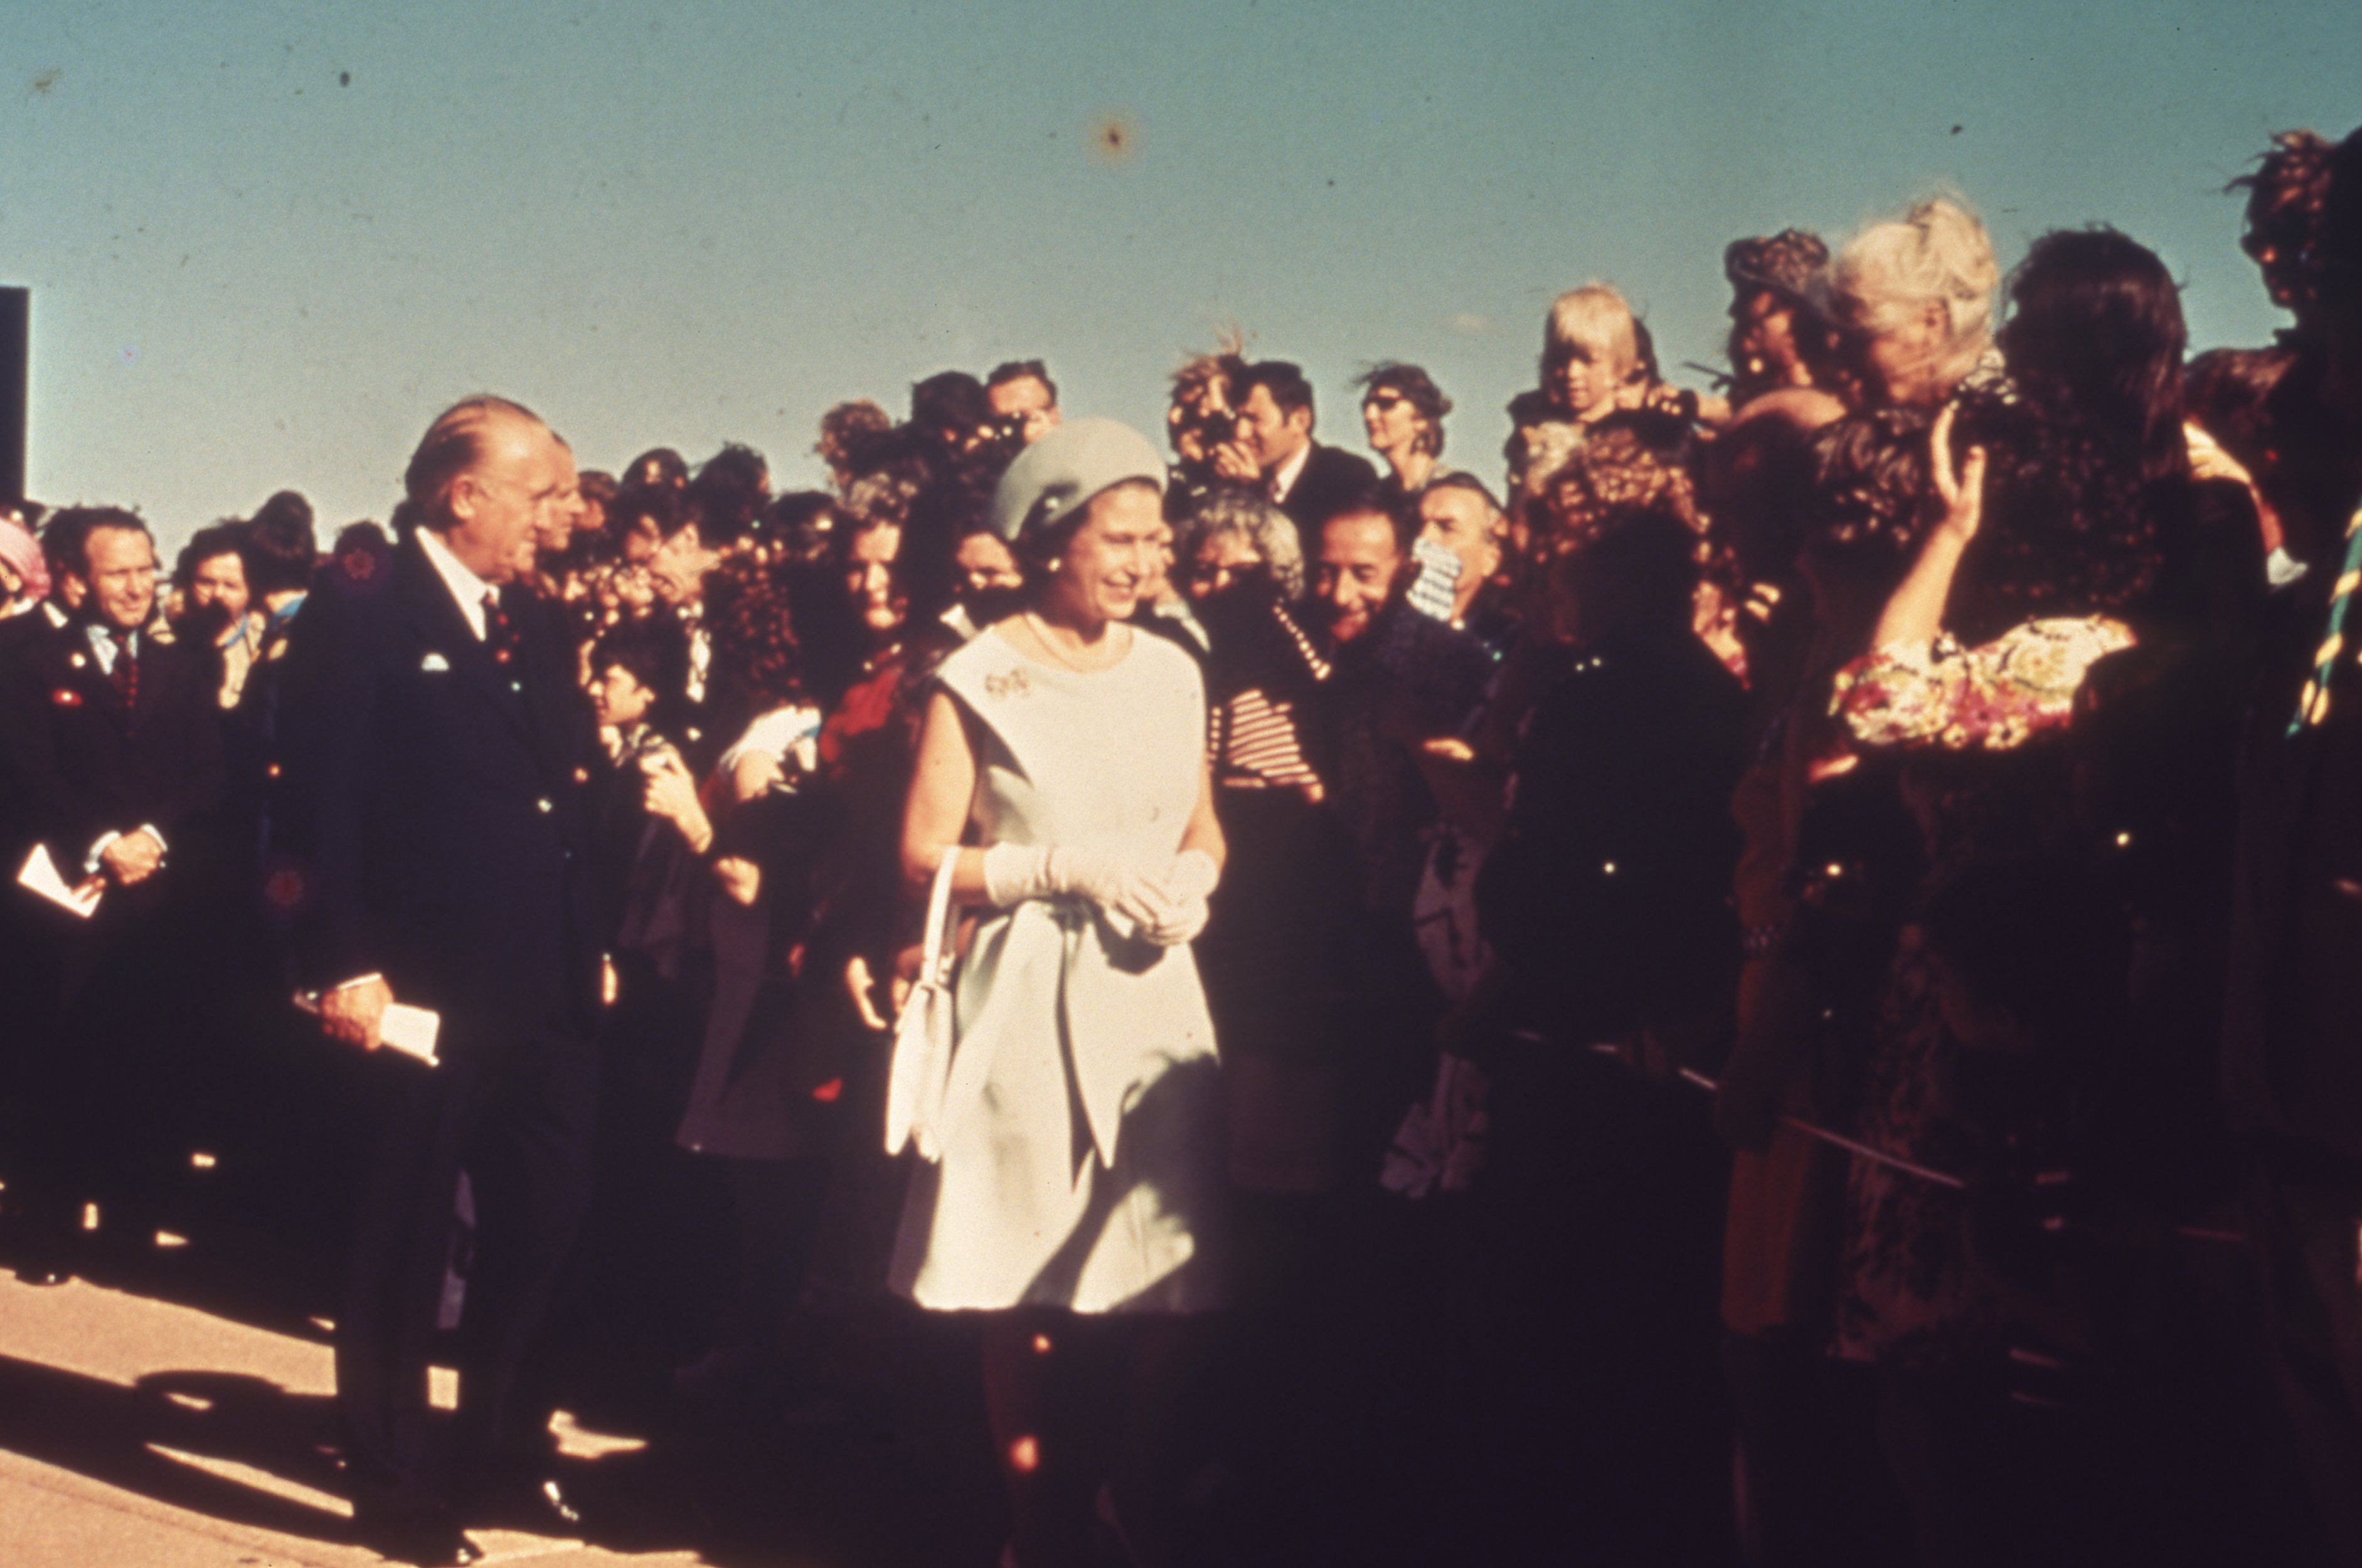 Queen Elizabeth II walking by the crowd of people.